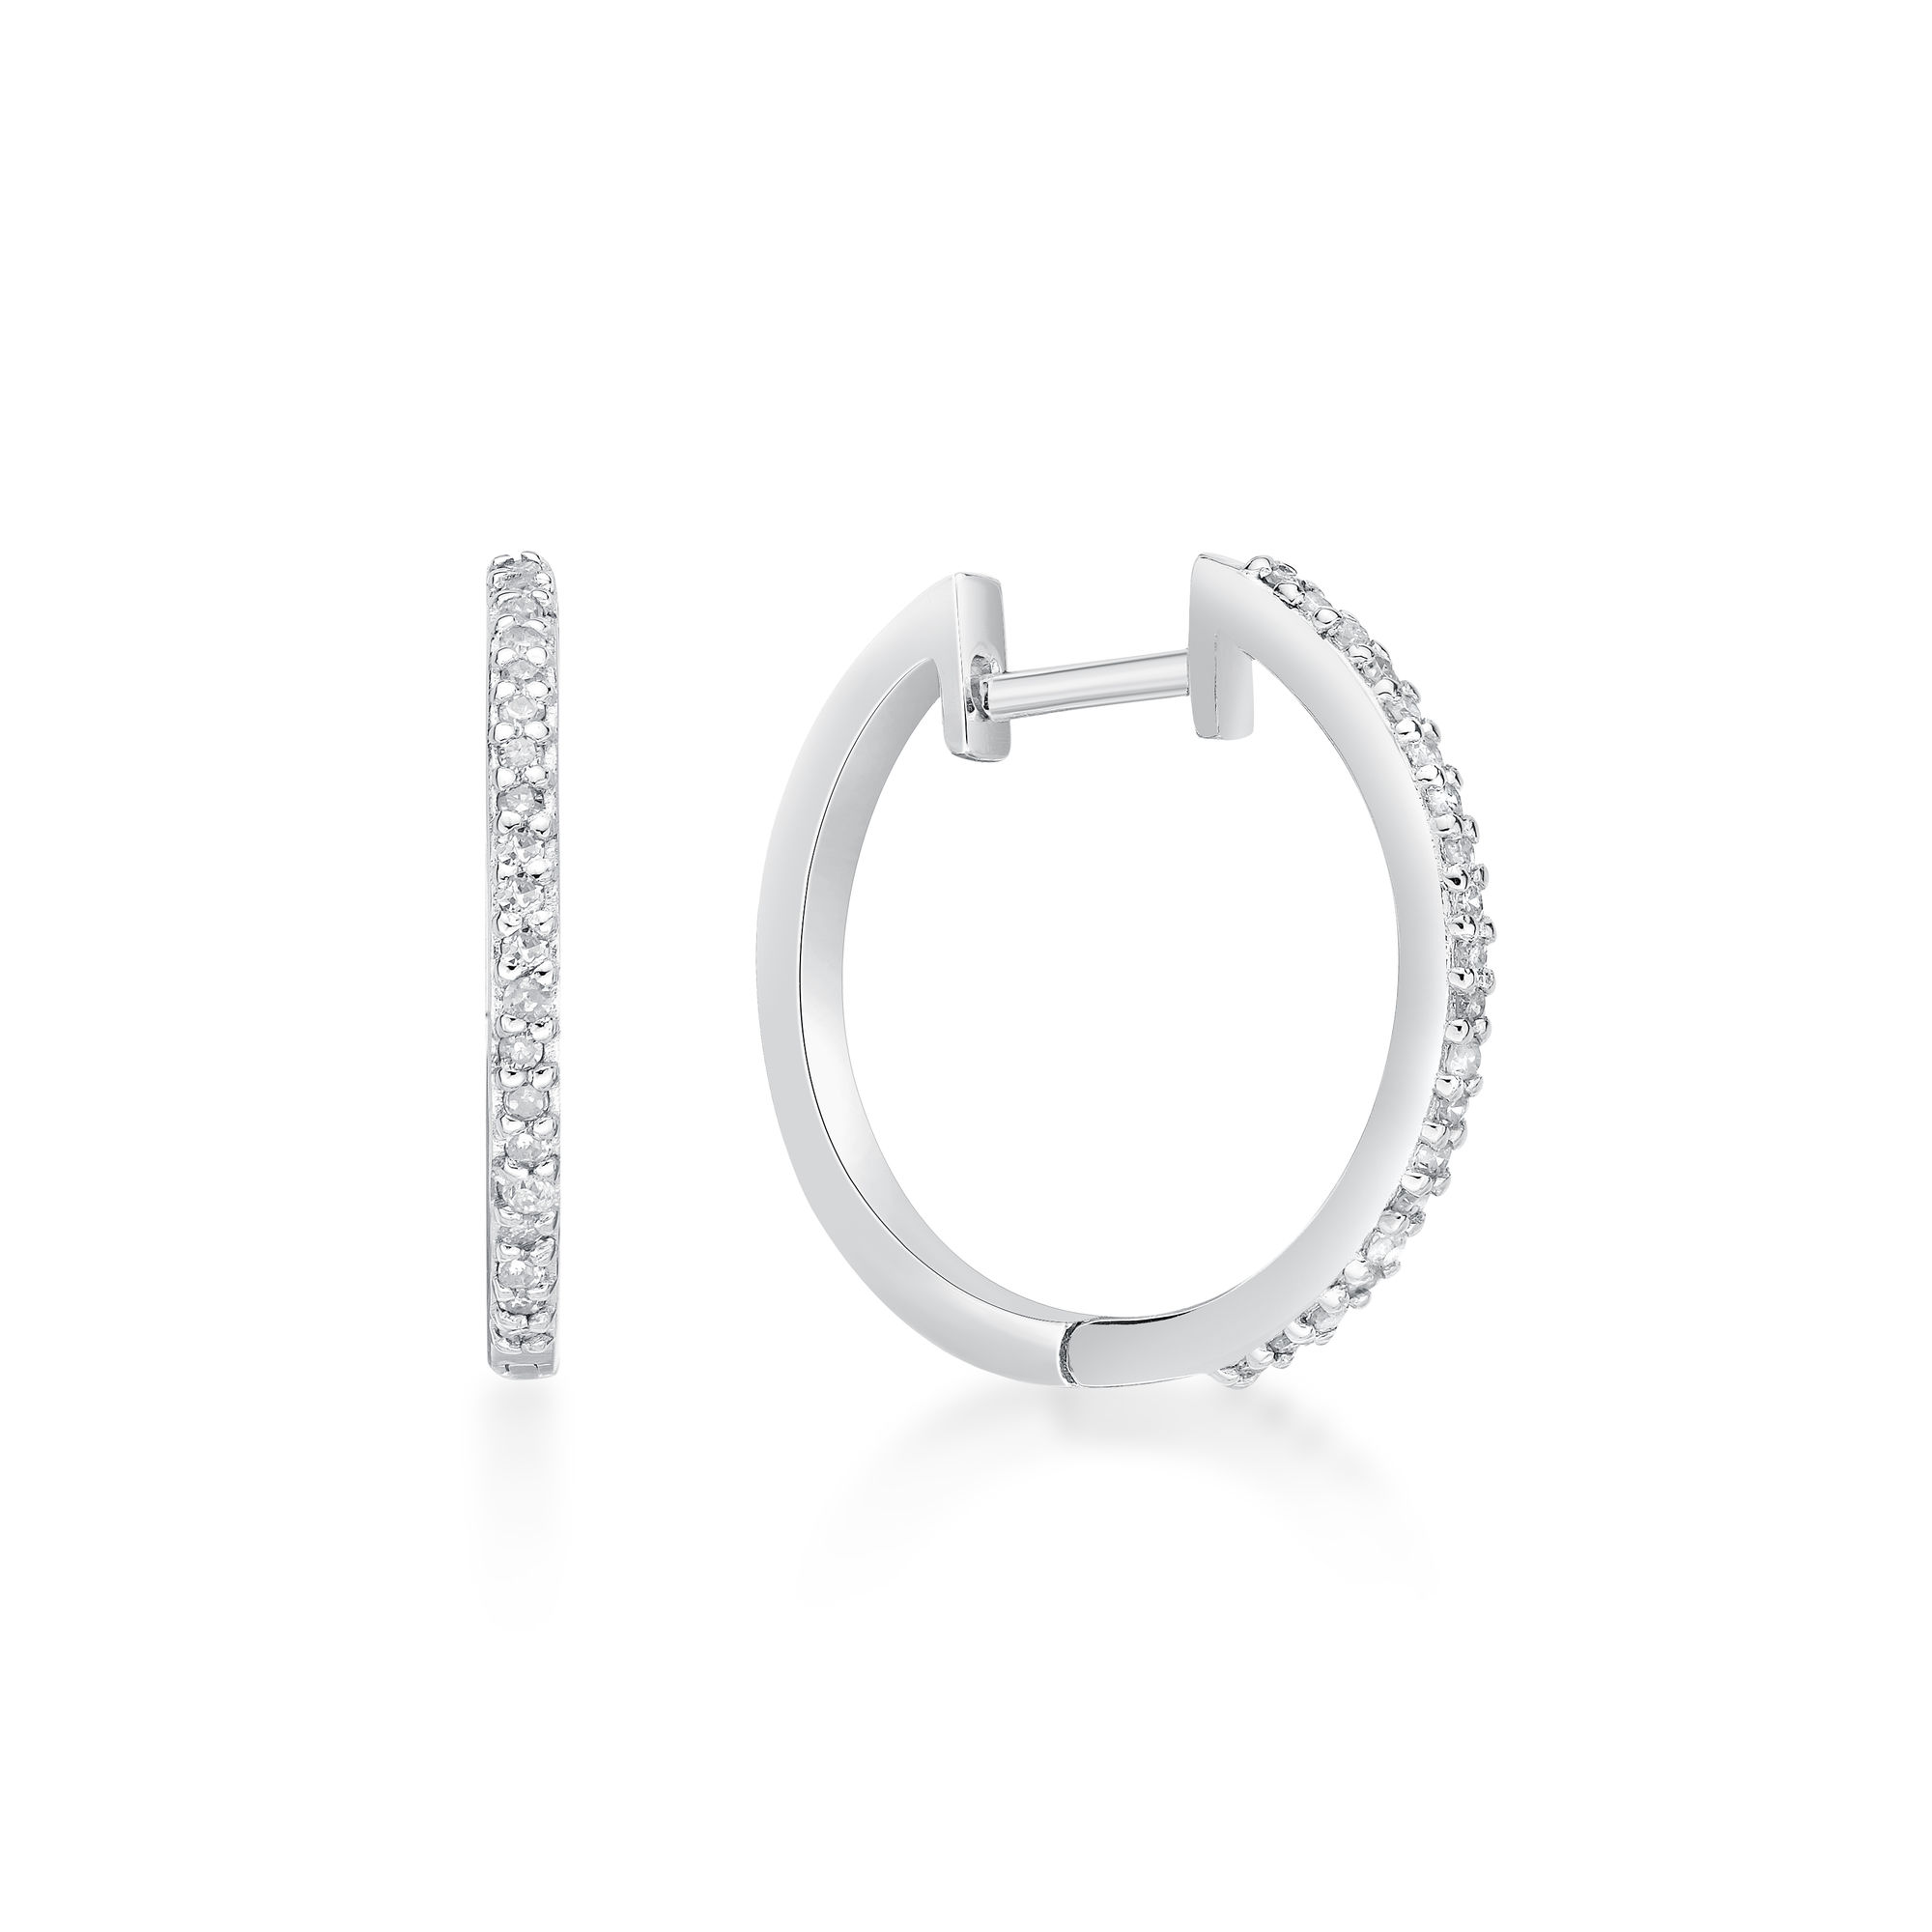 Lavari Jewelers Women's Diamond Hoop Earrings, Sterling Silver, .16 Cttw, 17 MM